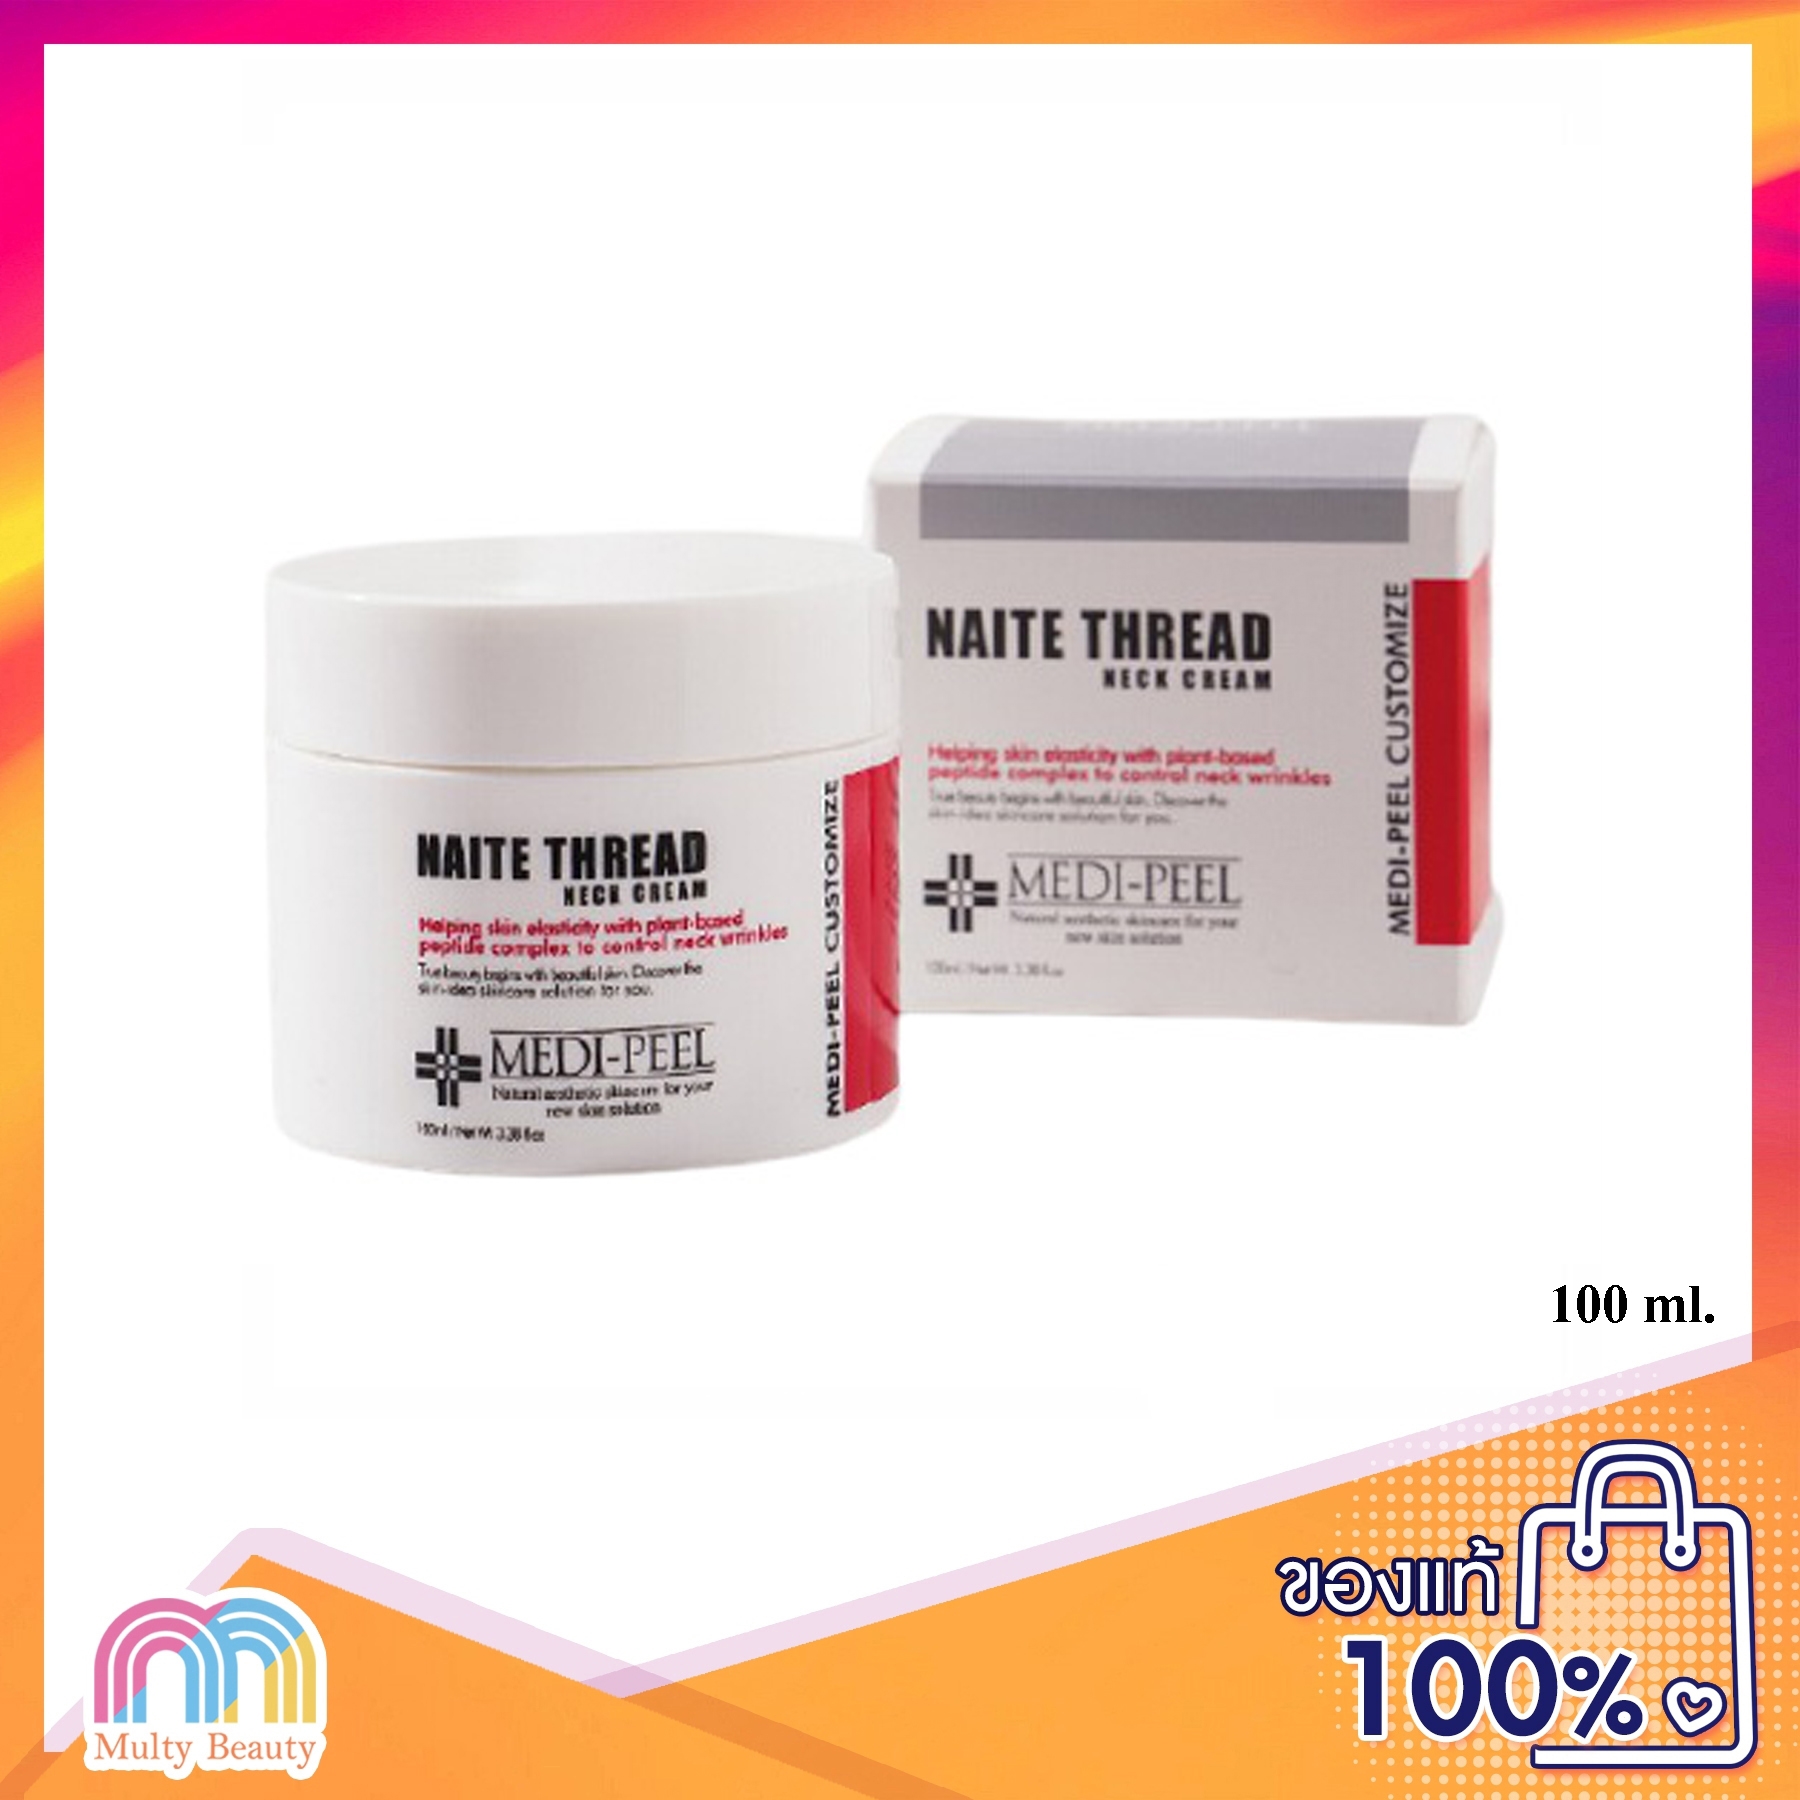 Multy Beauty MEDI-PEEL Premium Naite Thread Neck Cream 100 ml. ครีมบำรุงผิวสำหรับบริเวณคอโดยเฉพาะ